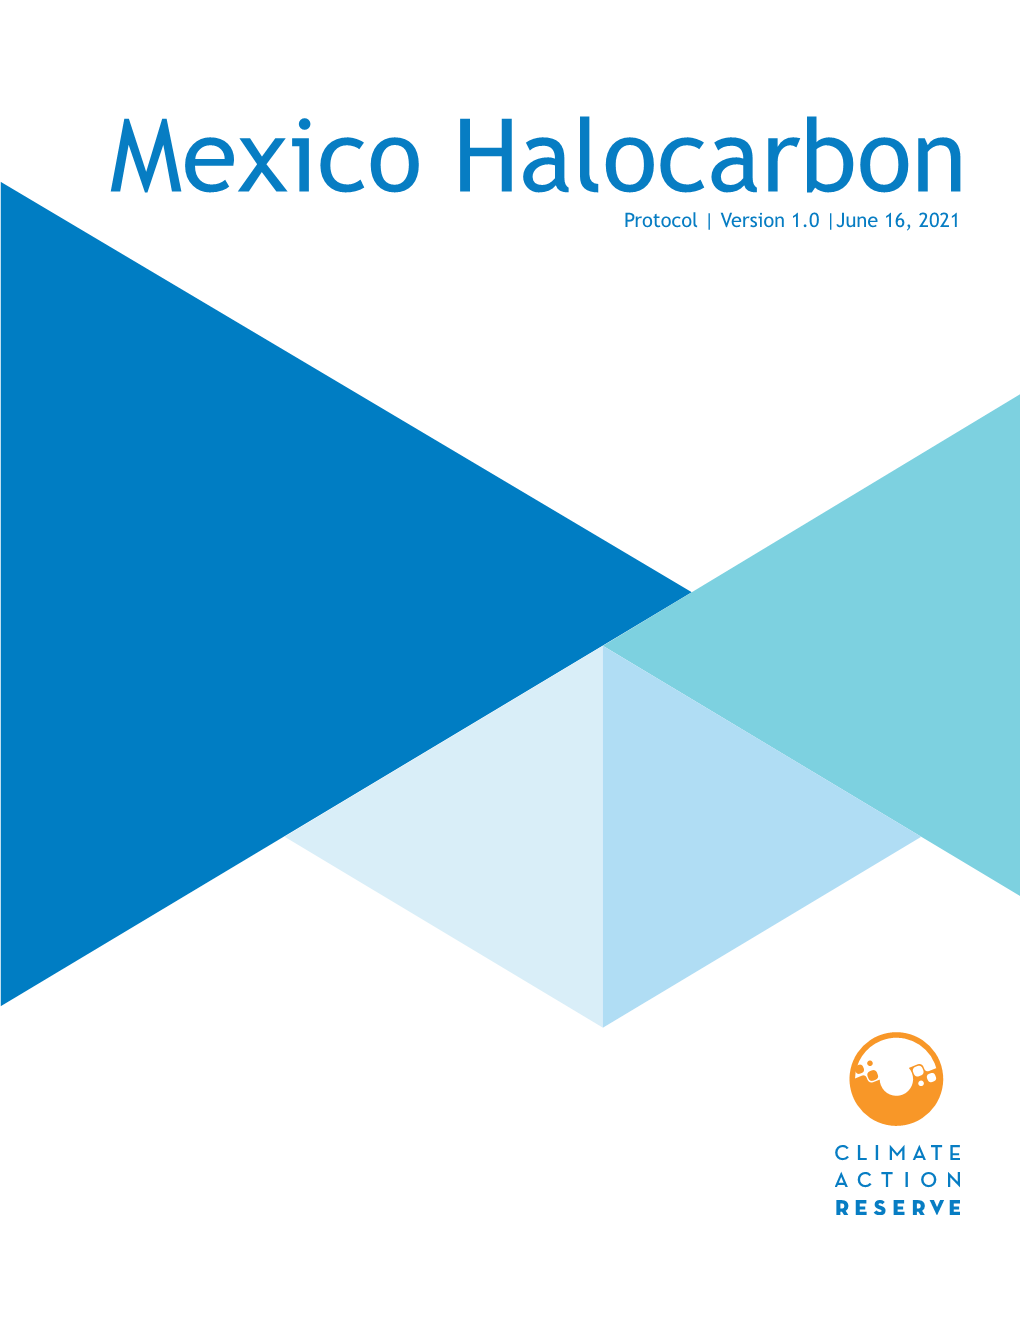 Mexico Halocarbon Protocol Version 1.0, June 2021